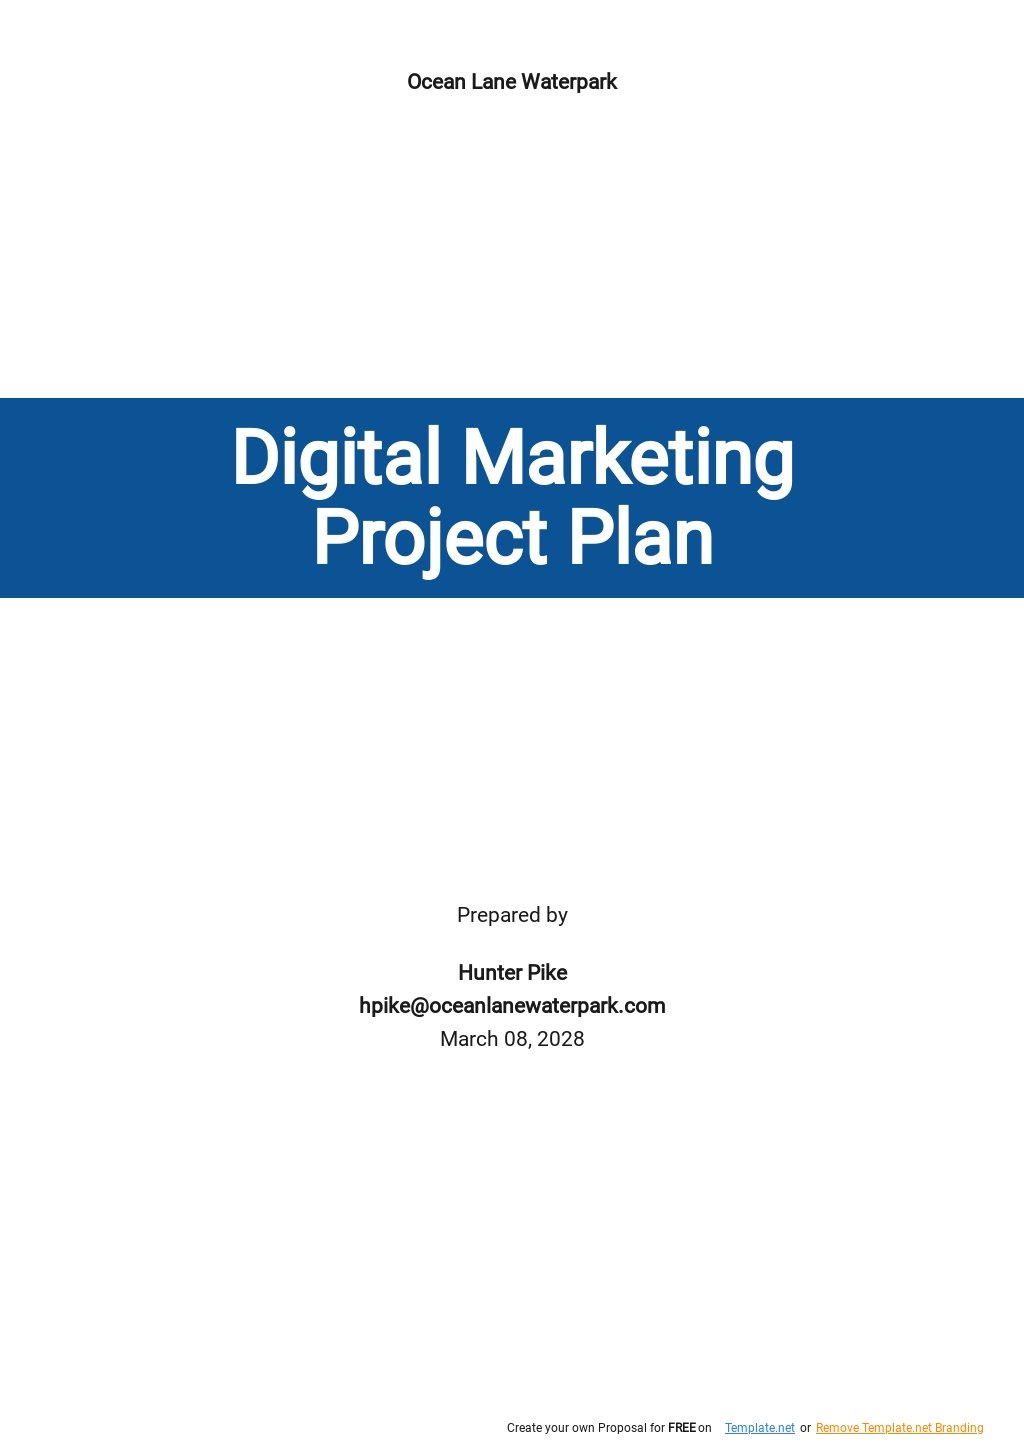 Digital Marketing Project Plan Template